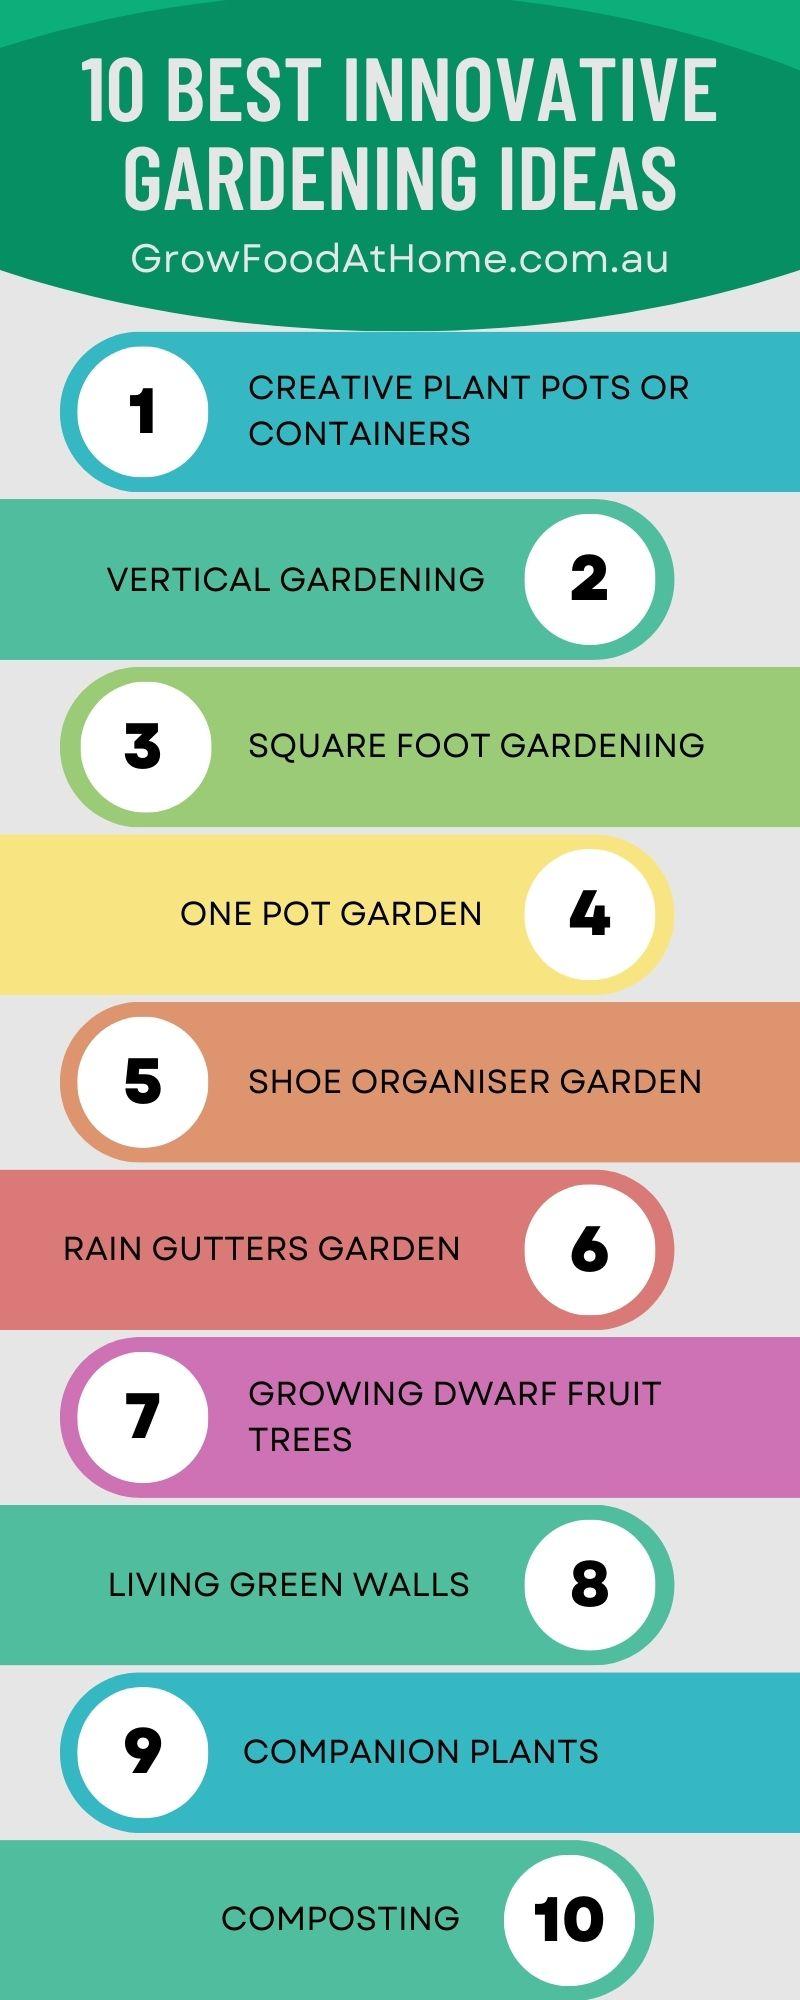 10 Best Innovative Gardening Ideas